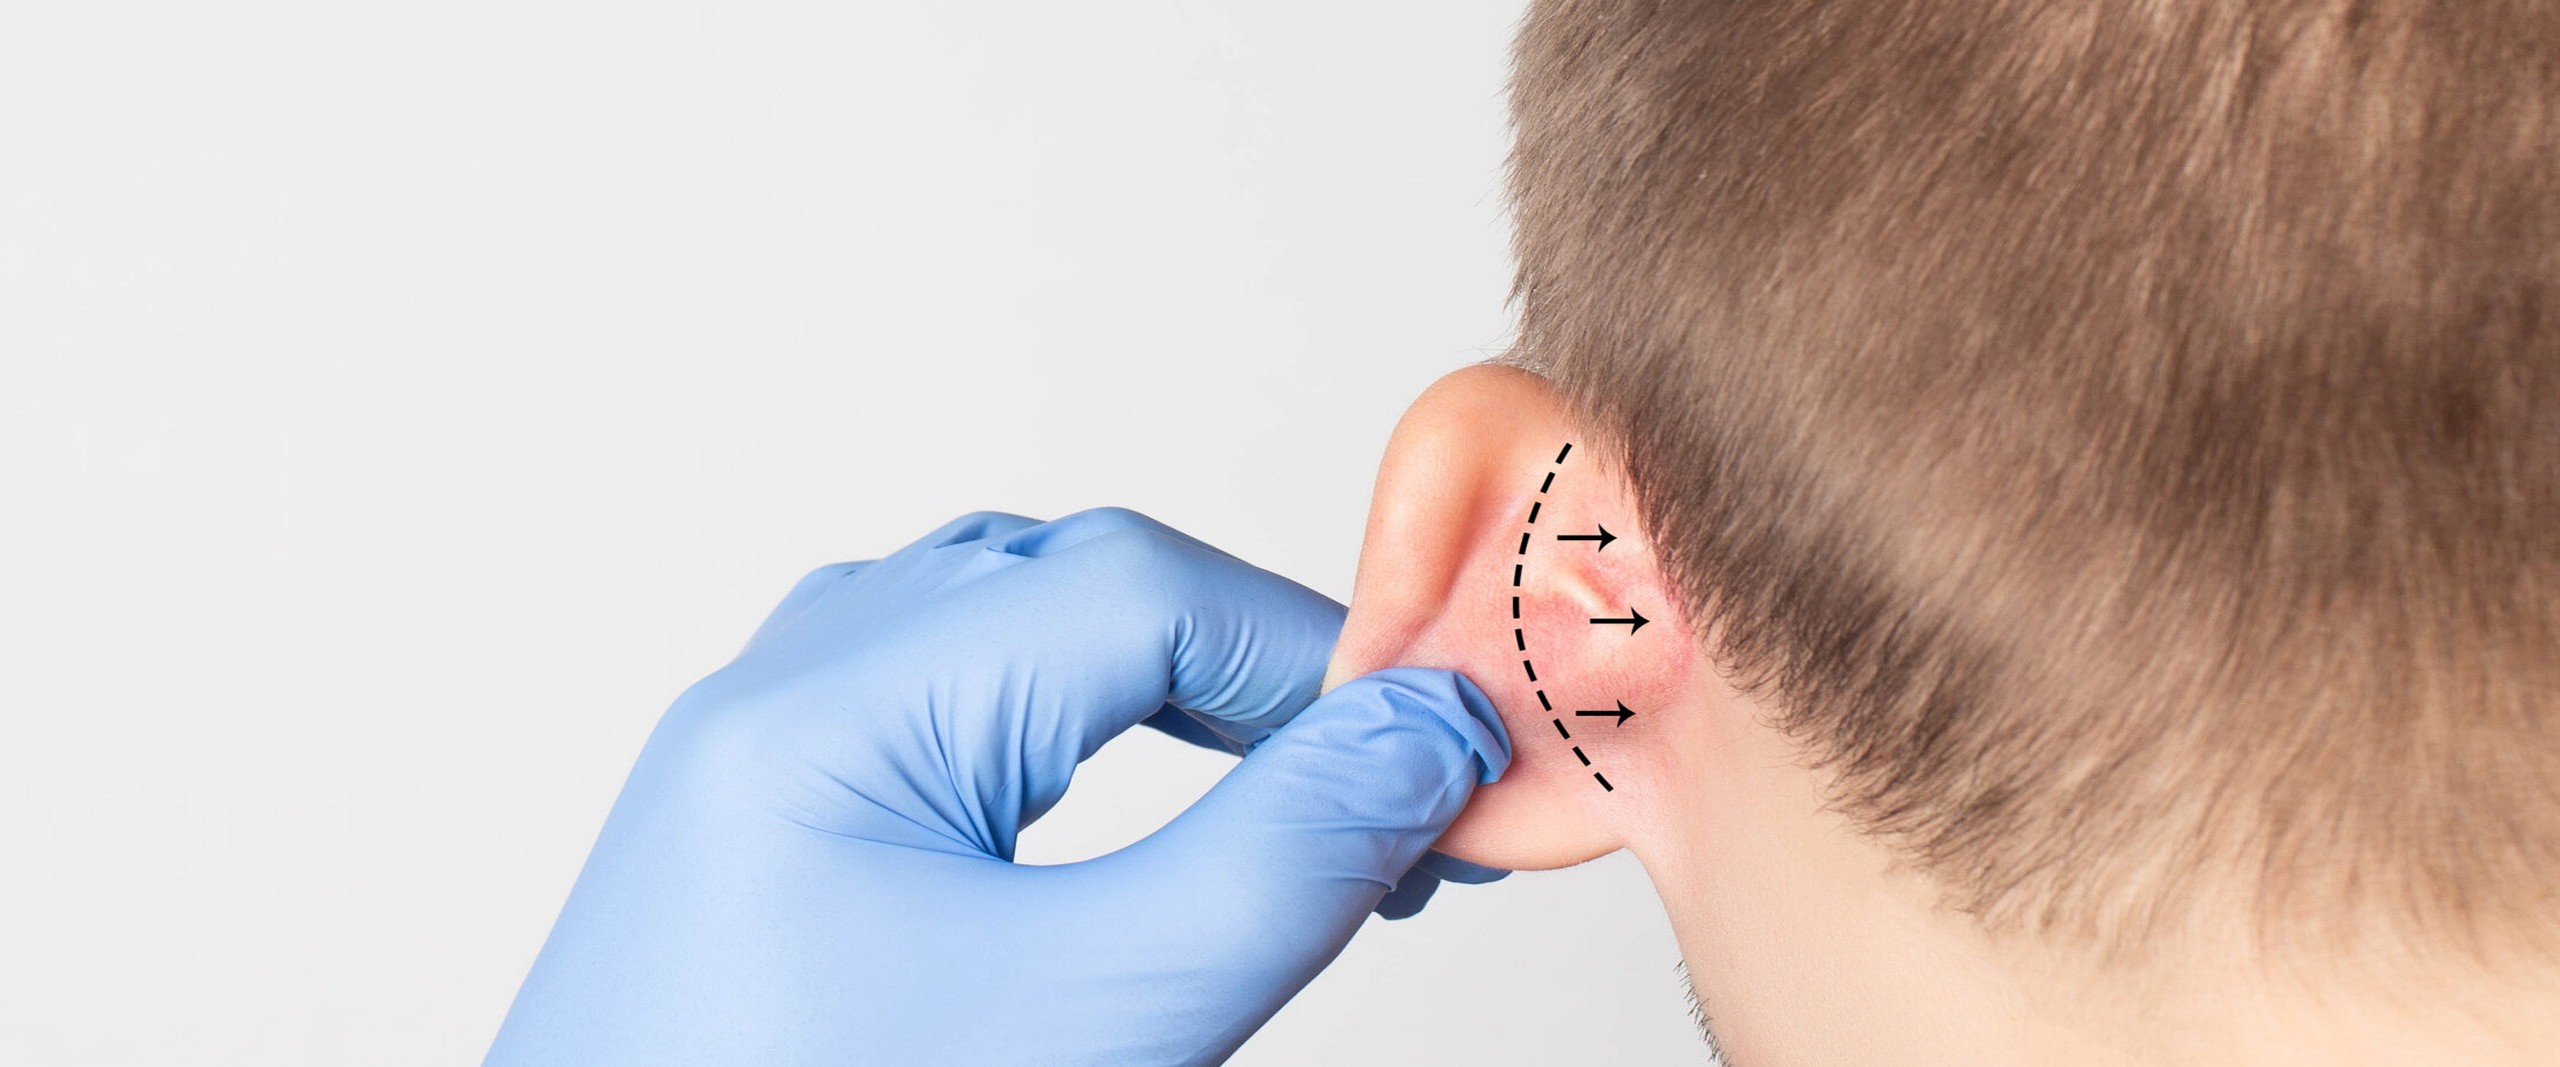 ear correction or otoplasty